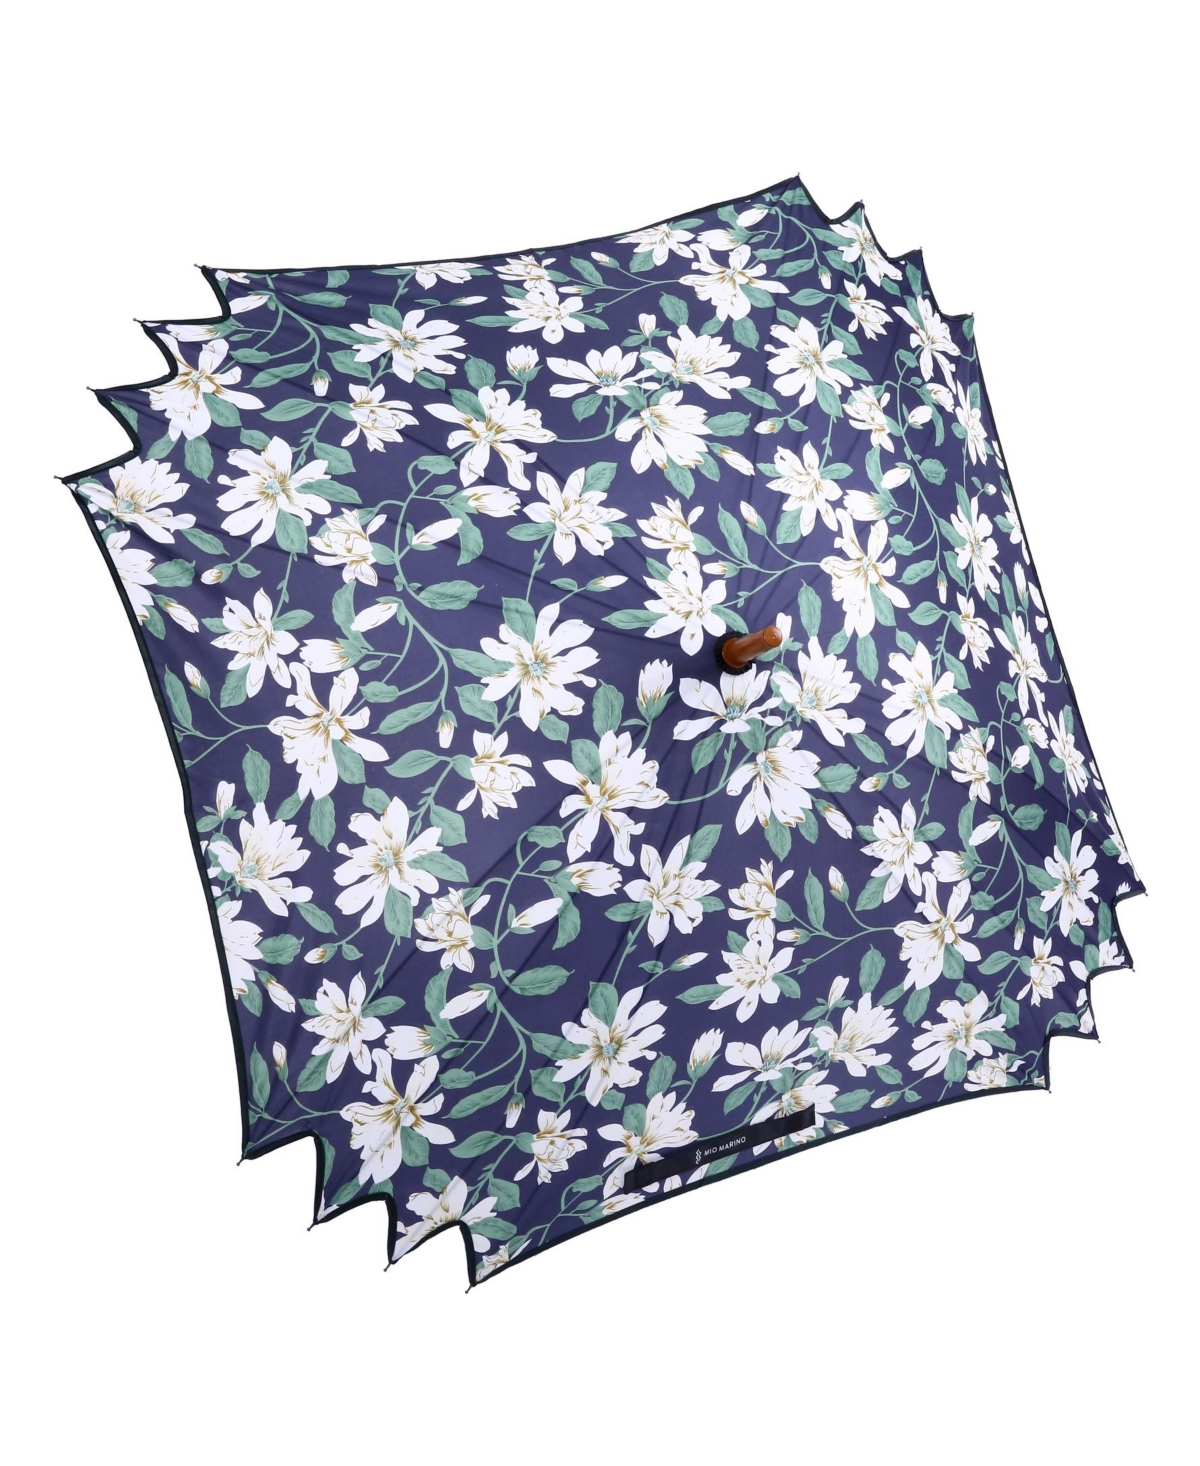 Fashionable Extra Large Automatic Open Golf Umbrella - Bloom